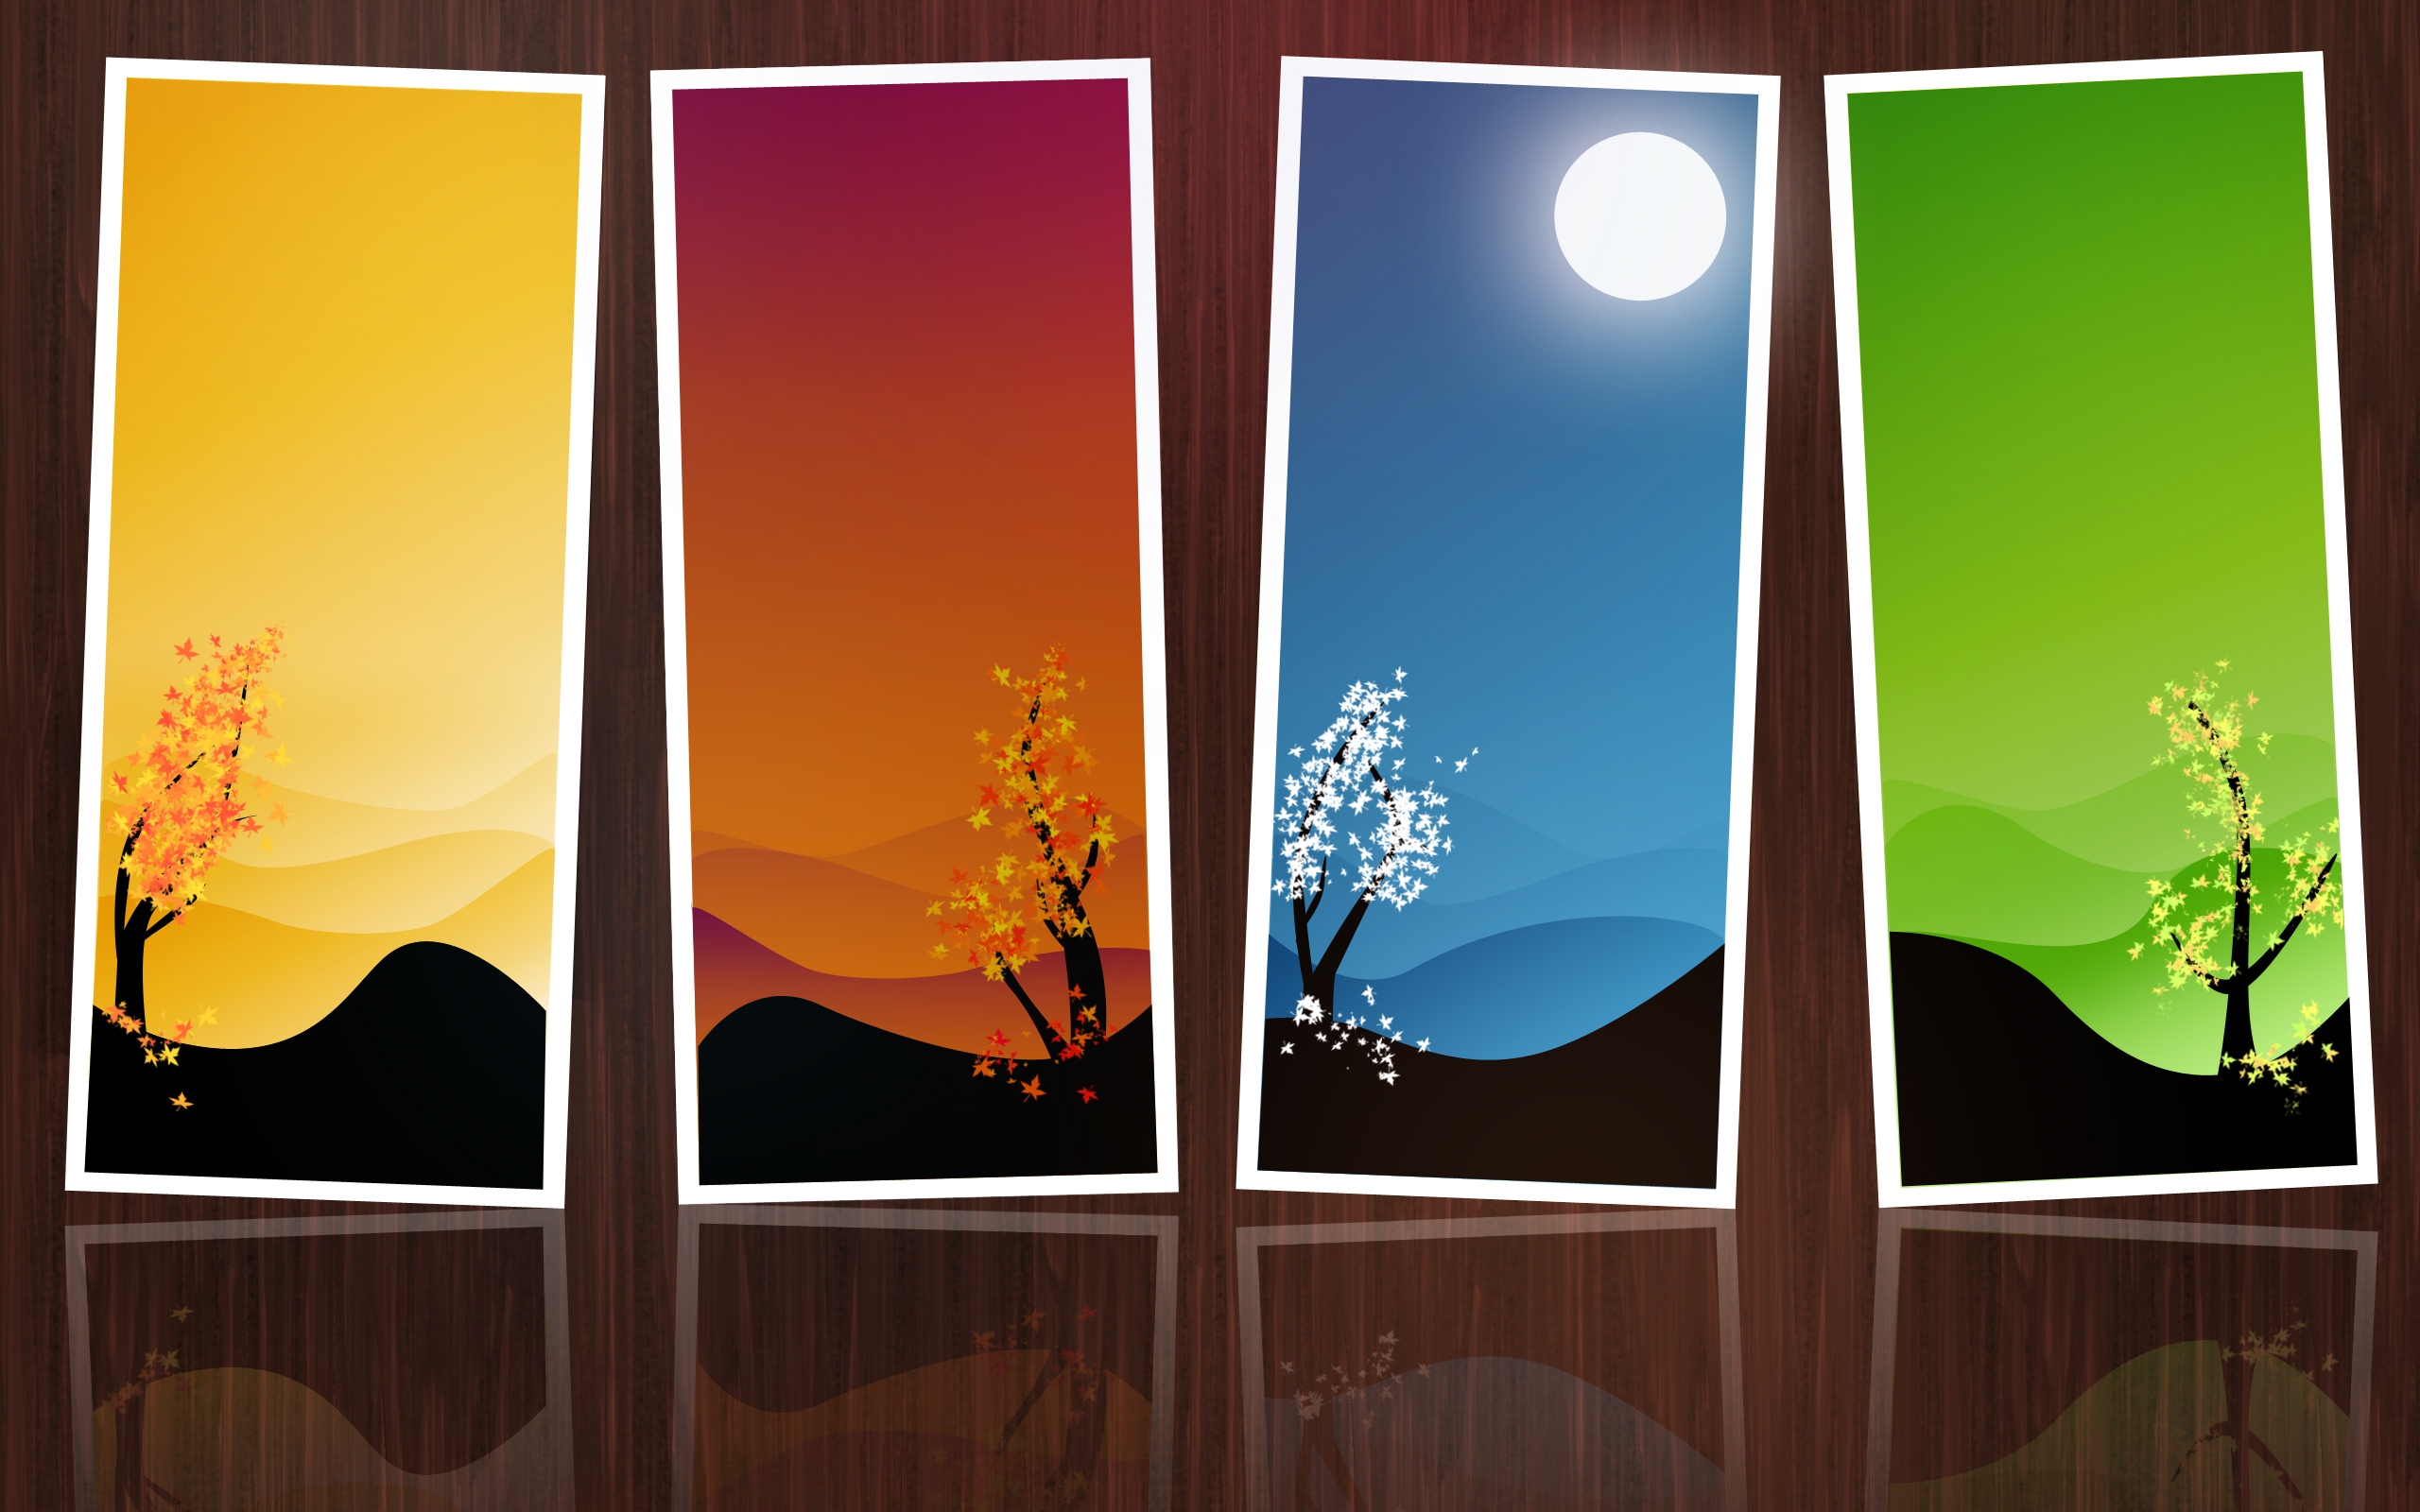 4 Seasons Frames for 2560 x 1600 widescreen resolution